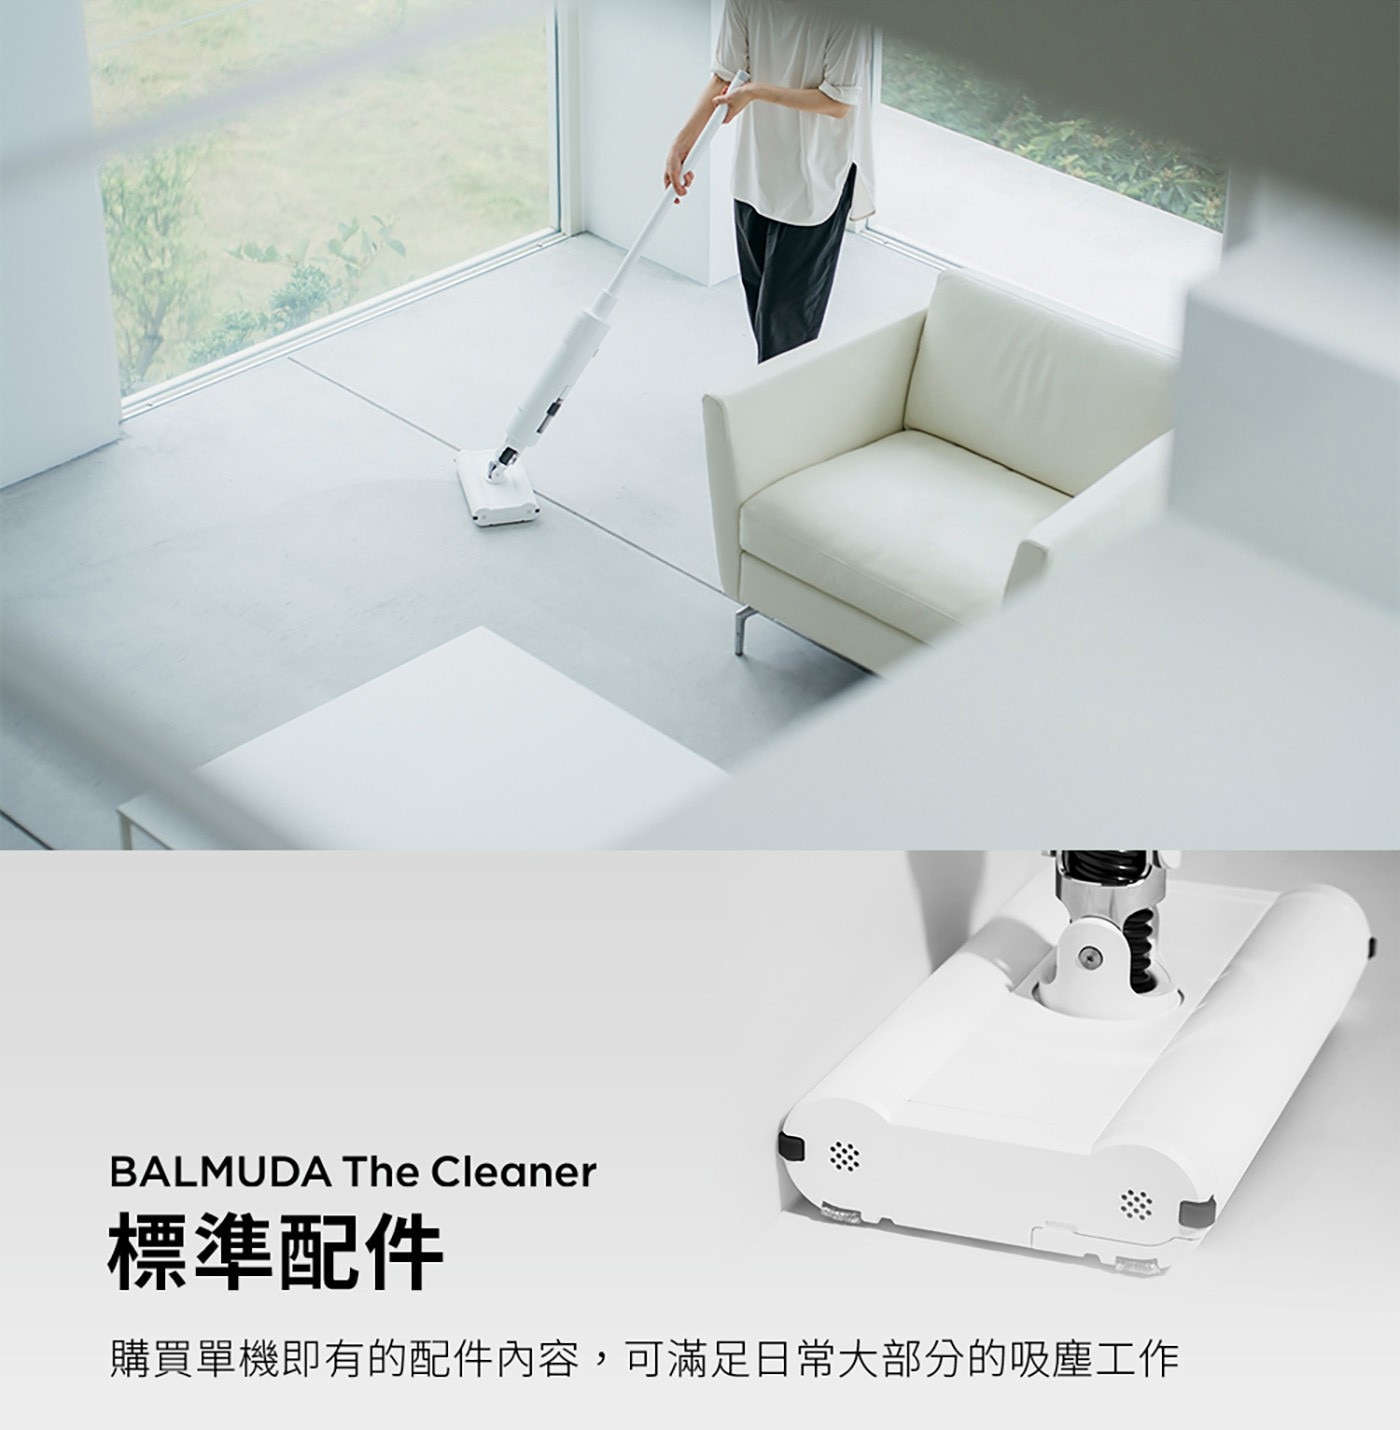 BALMUDA The Cleaner 手提無線吸塵器 C01C雙刷頭懸浮式吸塵器，絕佳手感嶄新的掃除體驗，前後左右移動更加滑順，斜面角落也可自在移動。